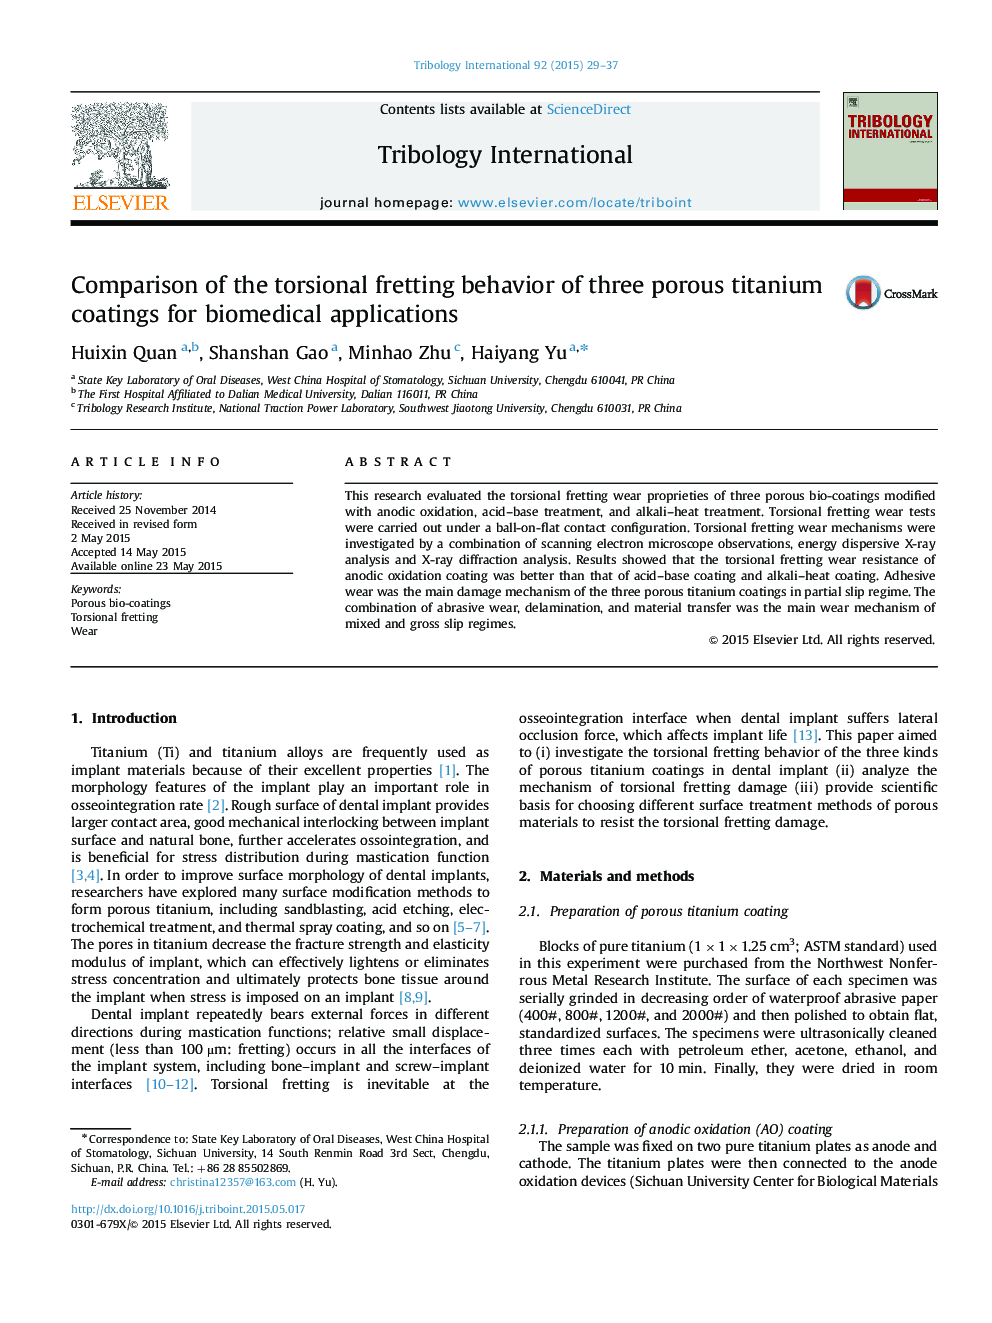 Comparison of the torsional fretting behavior of three porous titanium coatings for biomedical applications